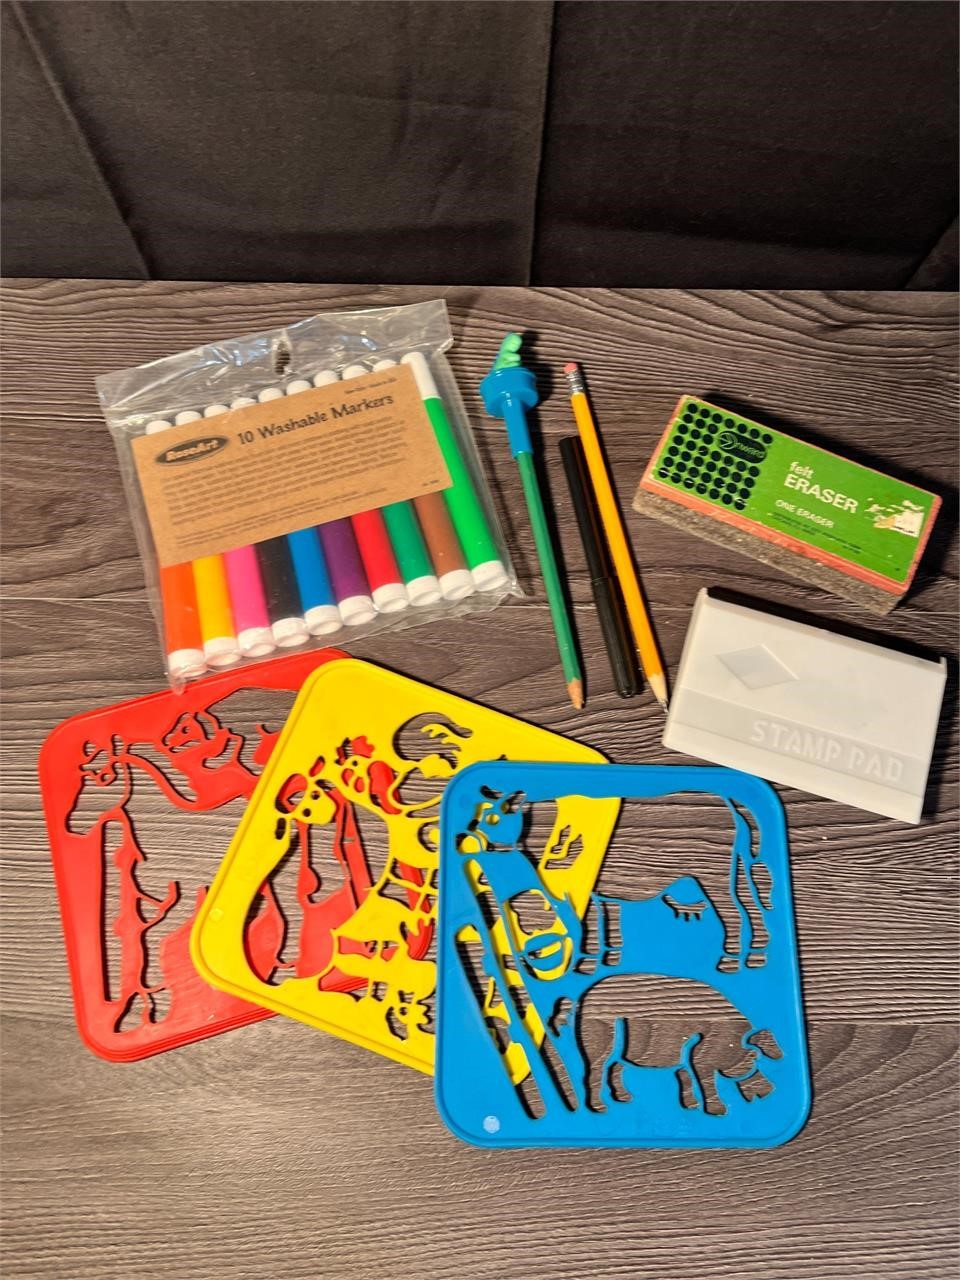 Washable Markers, Colorforms, Eraser